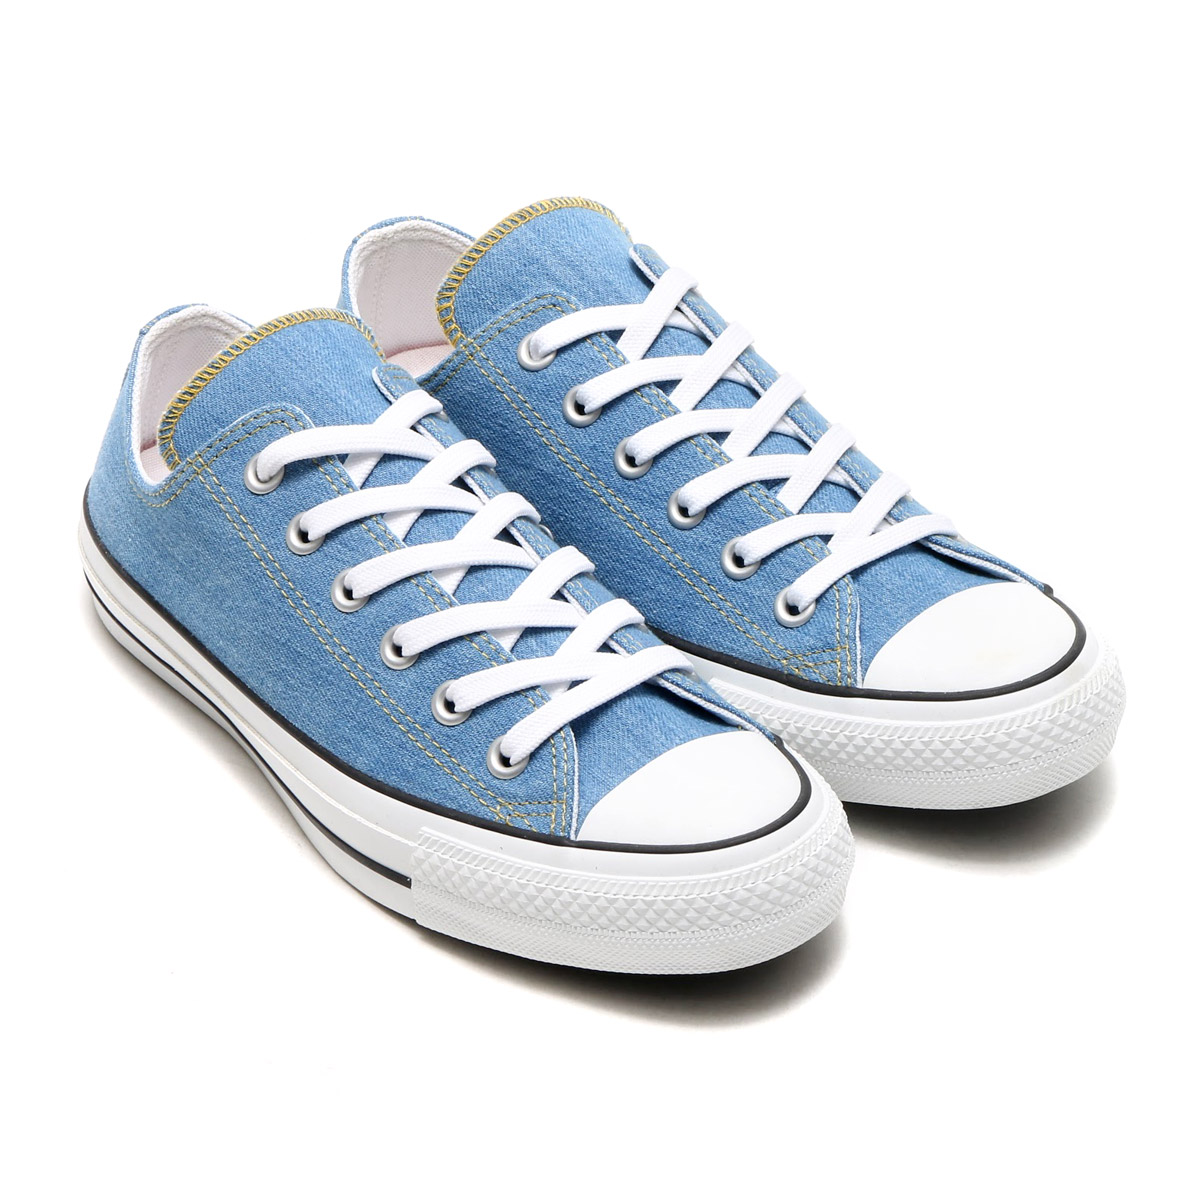 blue denim converse sneakers